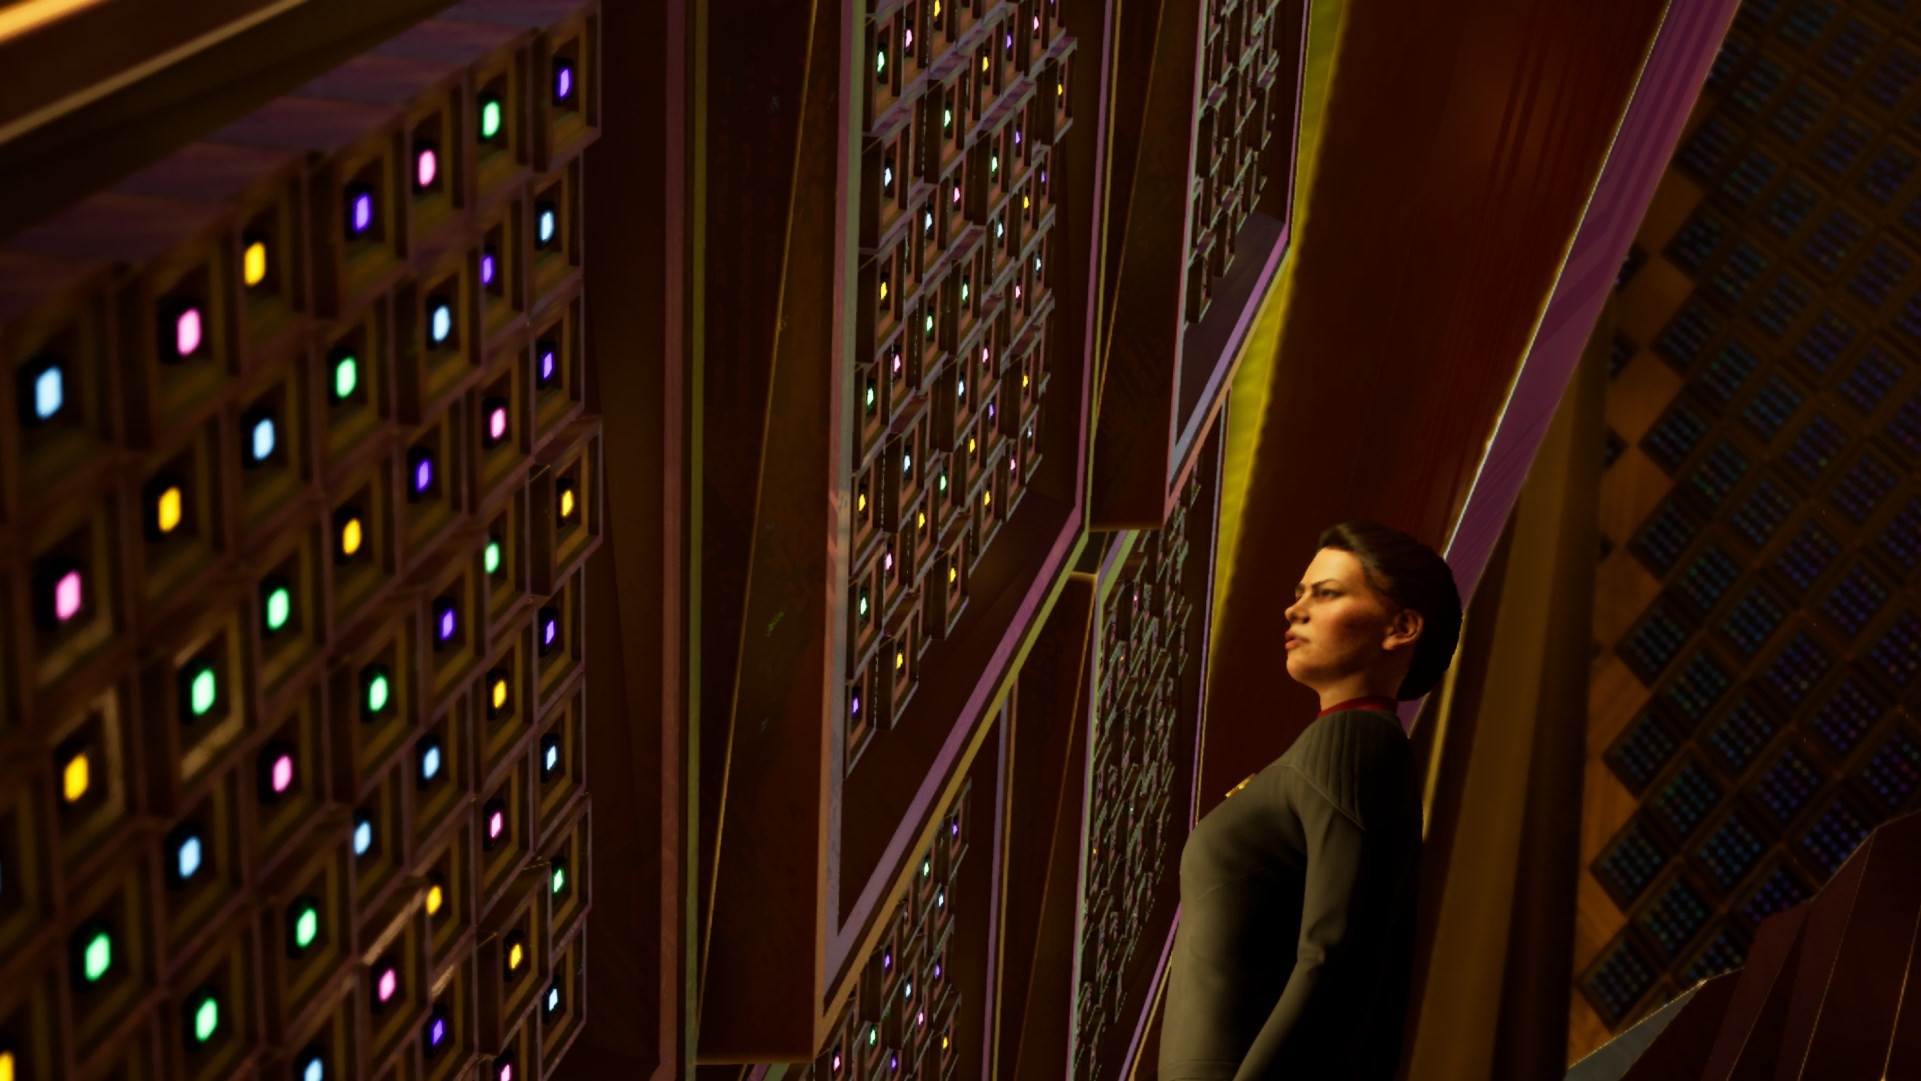 Star Trek: Resurgence Epic Games Account